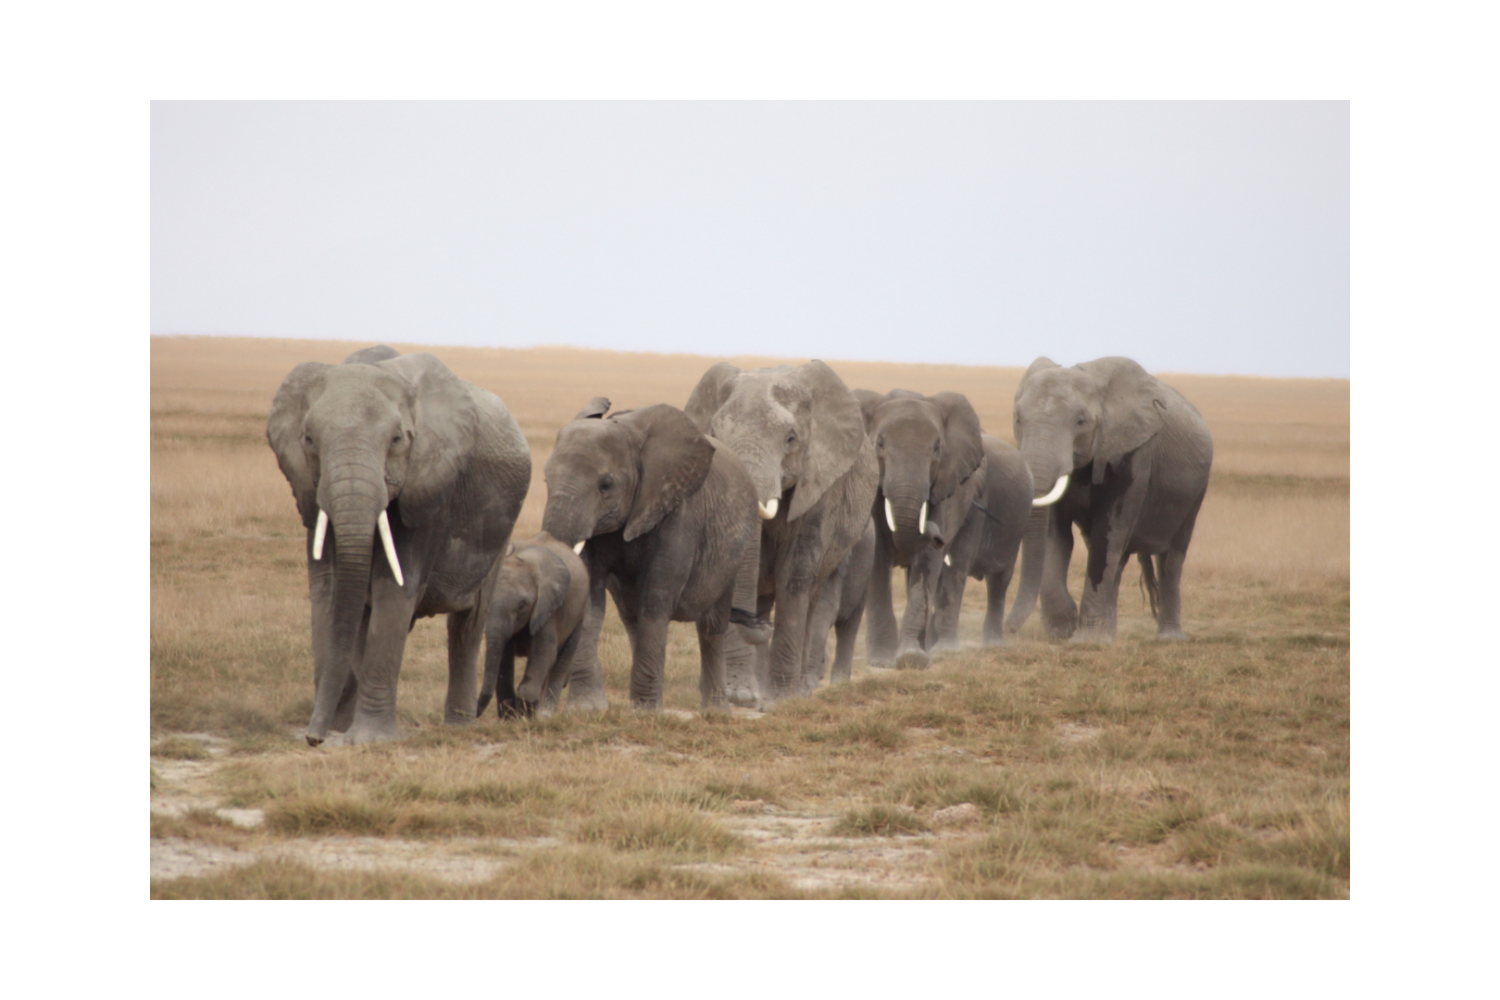 Elephants in tarangire national park